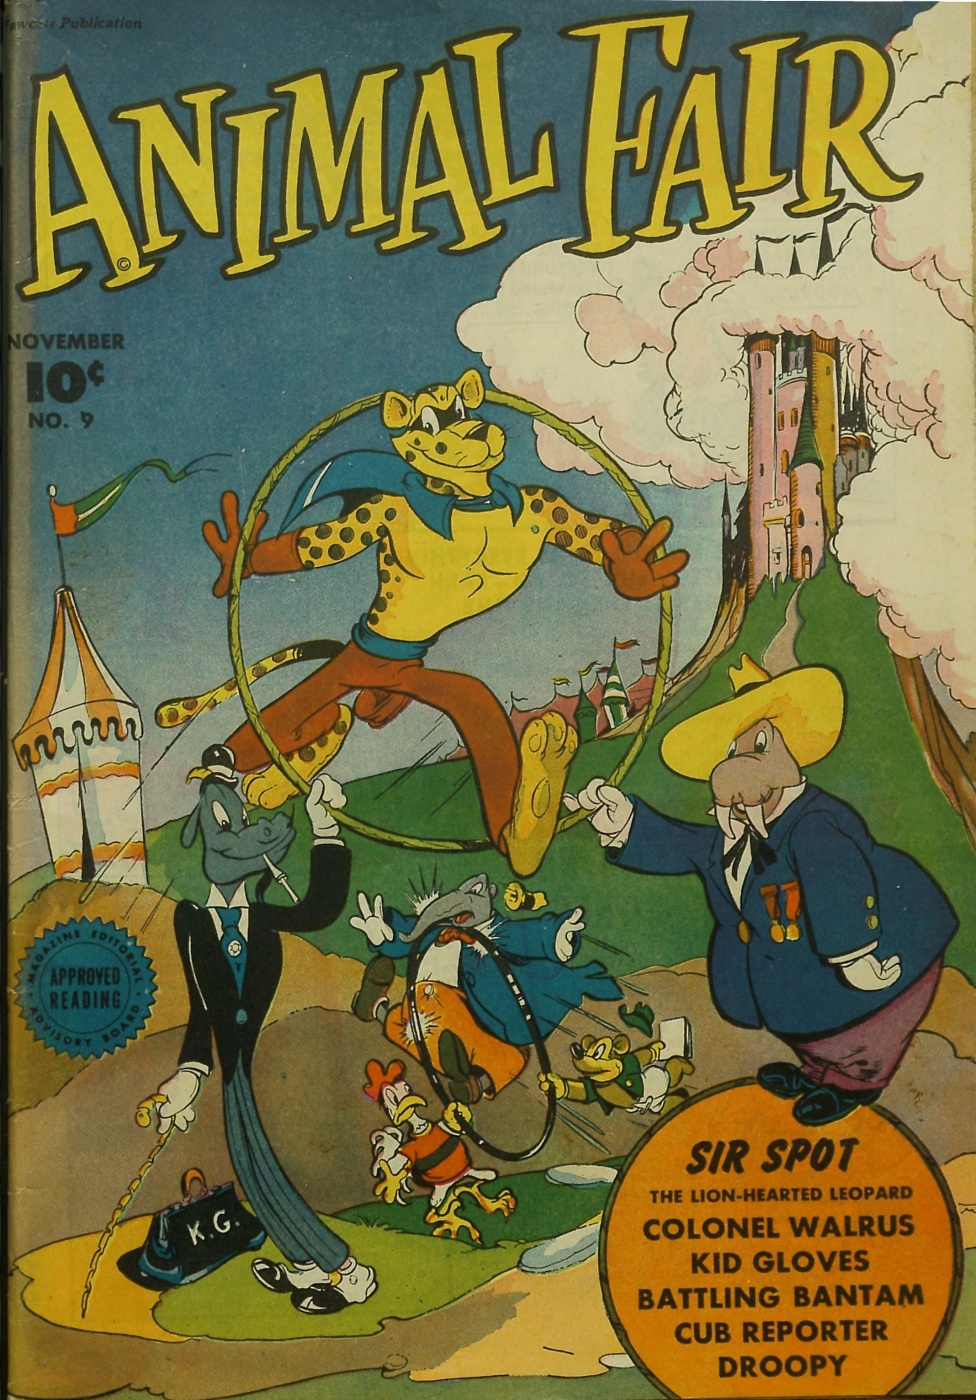 Funny Comic Strips: Animal Fair #4